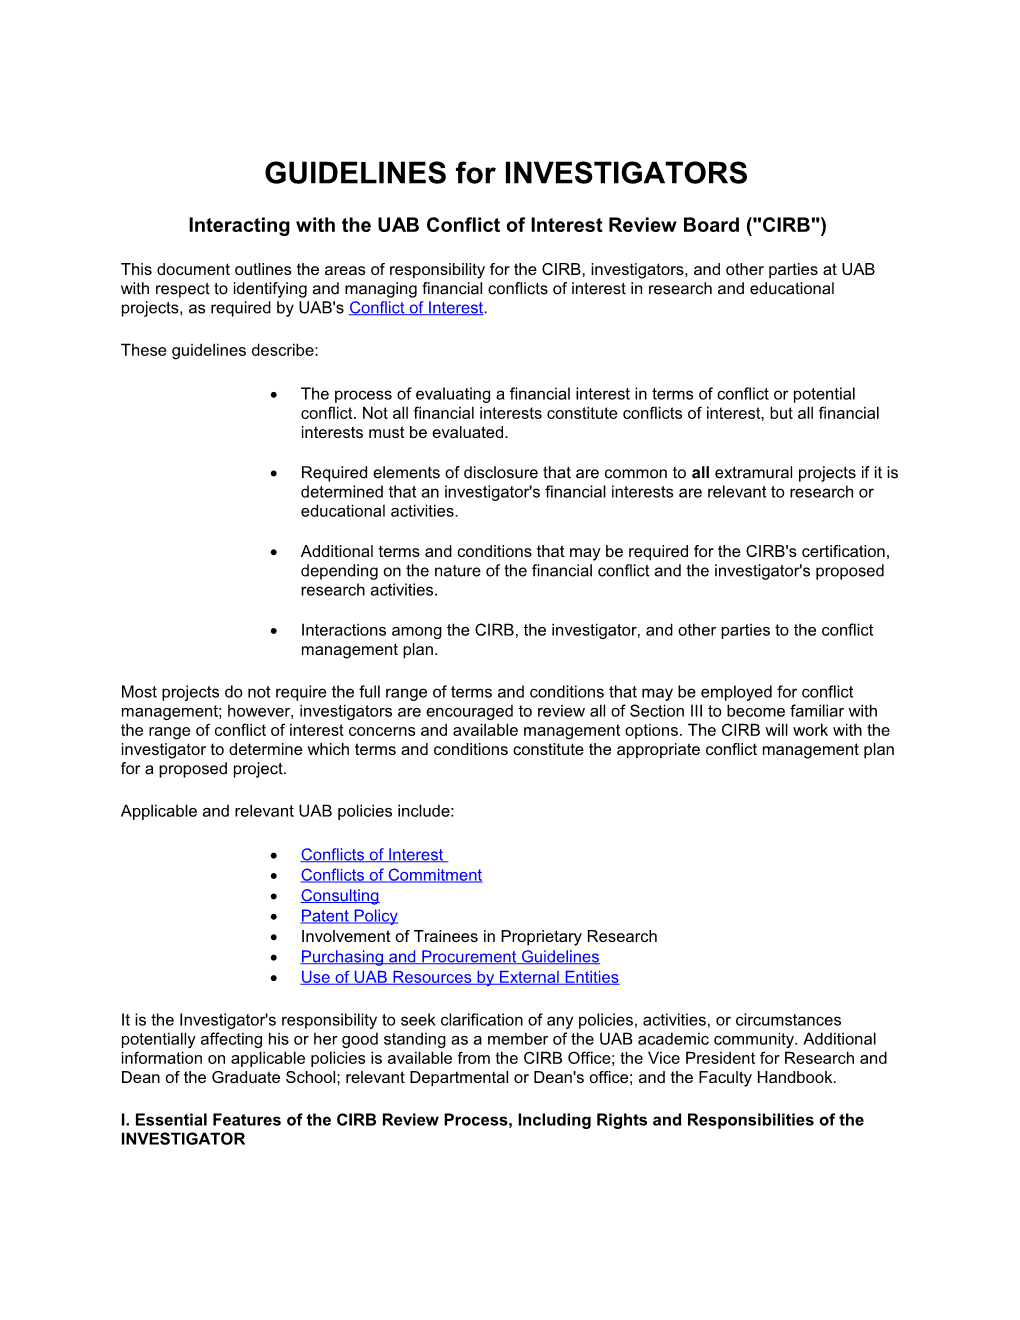 CIRB Guidelines for Investigators